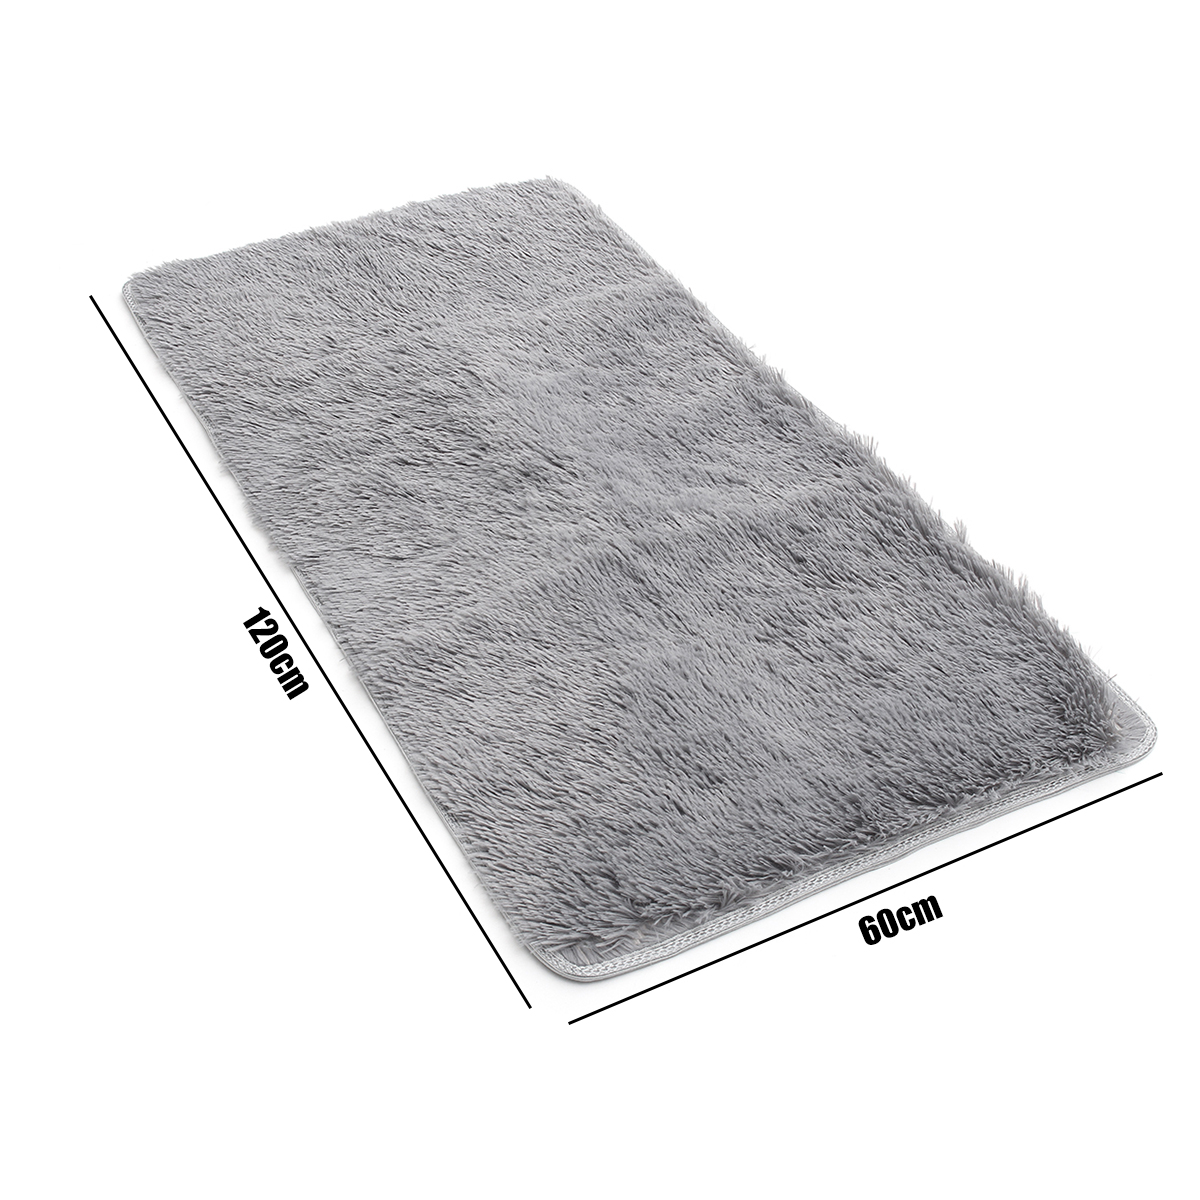 Soft-Fluffy-Rugs-Anti-Skid-Shaggy-Area-Rug-Home-Bedroom-Floor-Area-Carpet-1604512-3